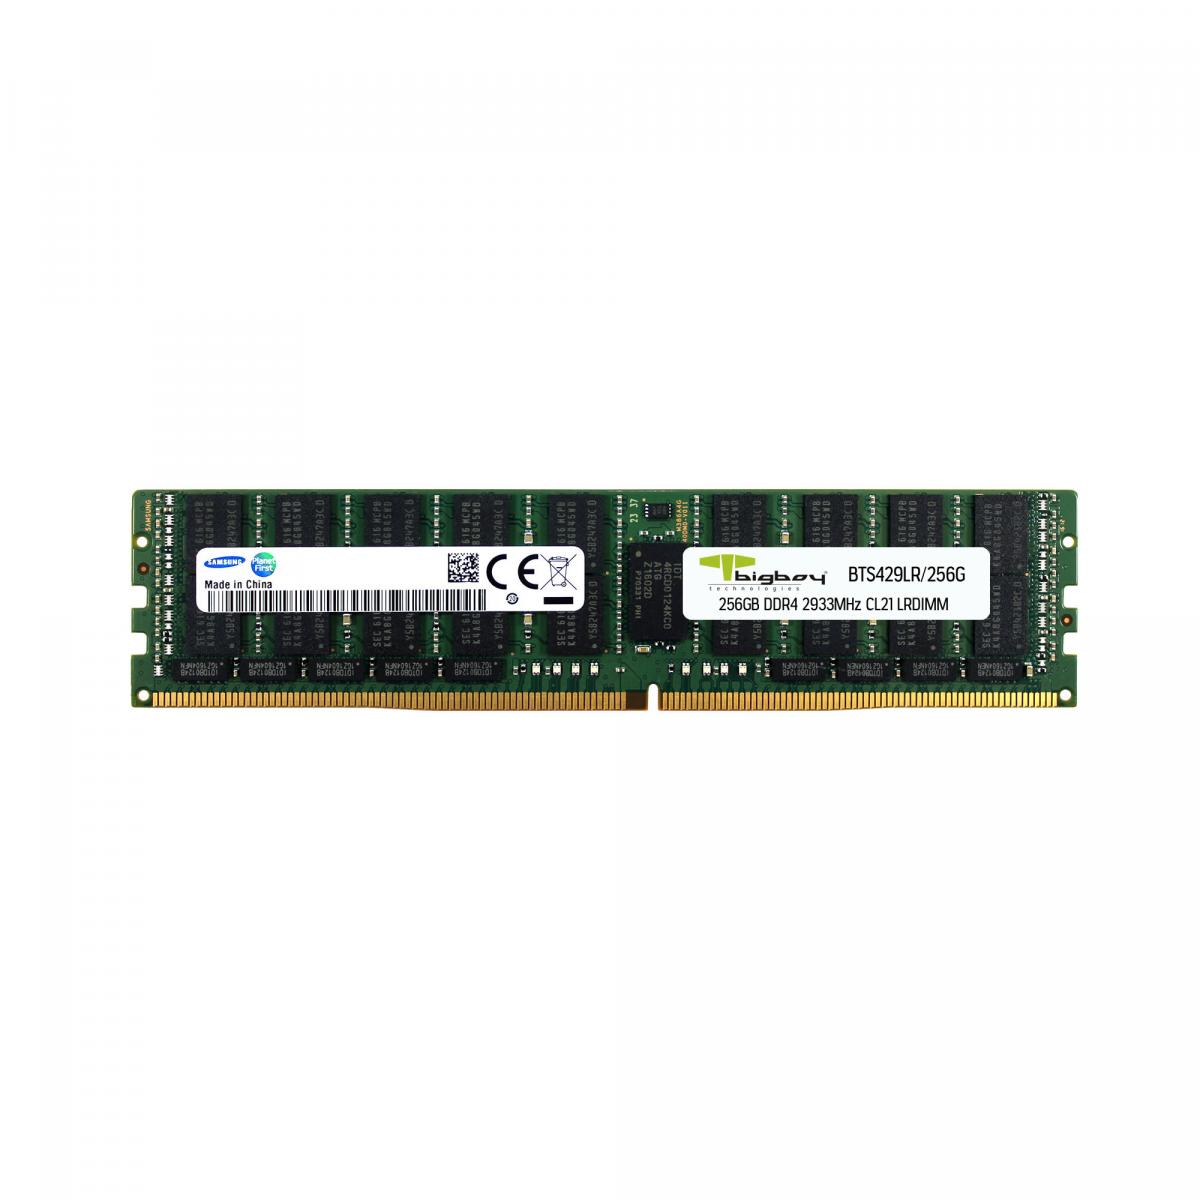 Bigboy 256GB DDR4 2933MHz CL21 LRDIMM Server Rami BTS429LR/256G